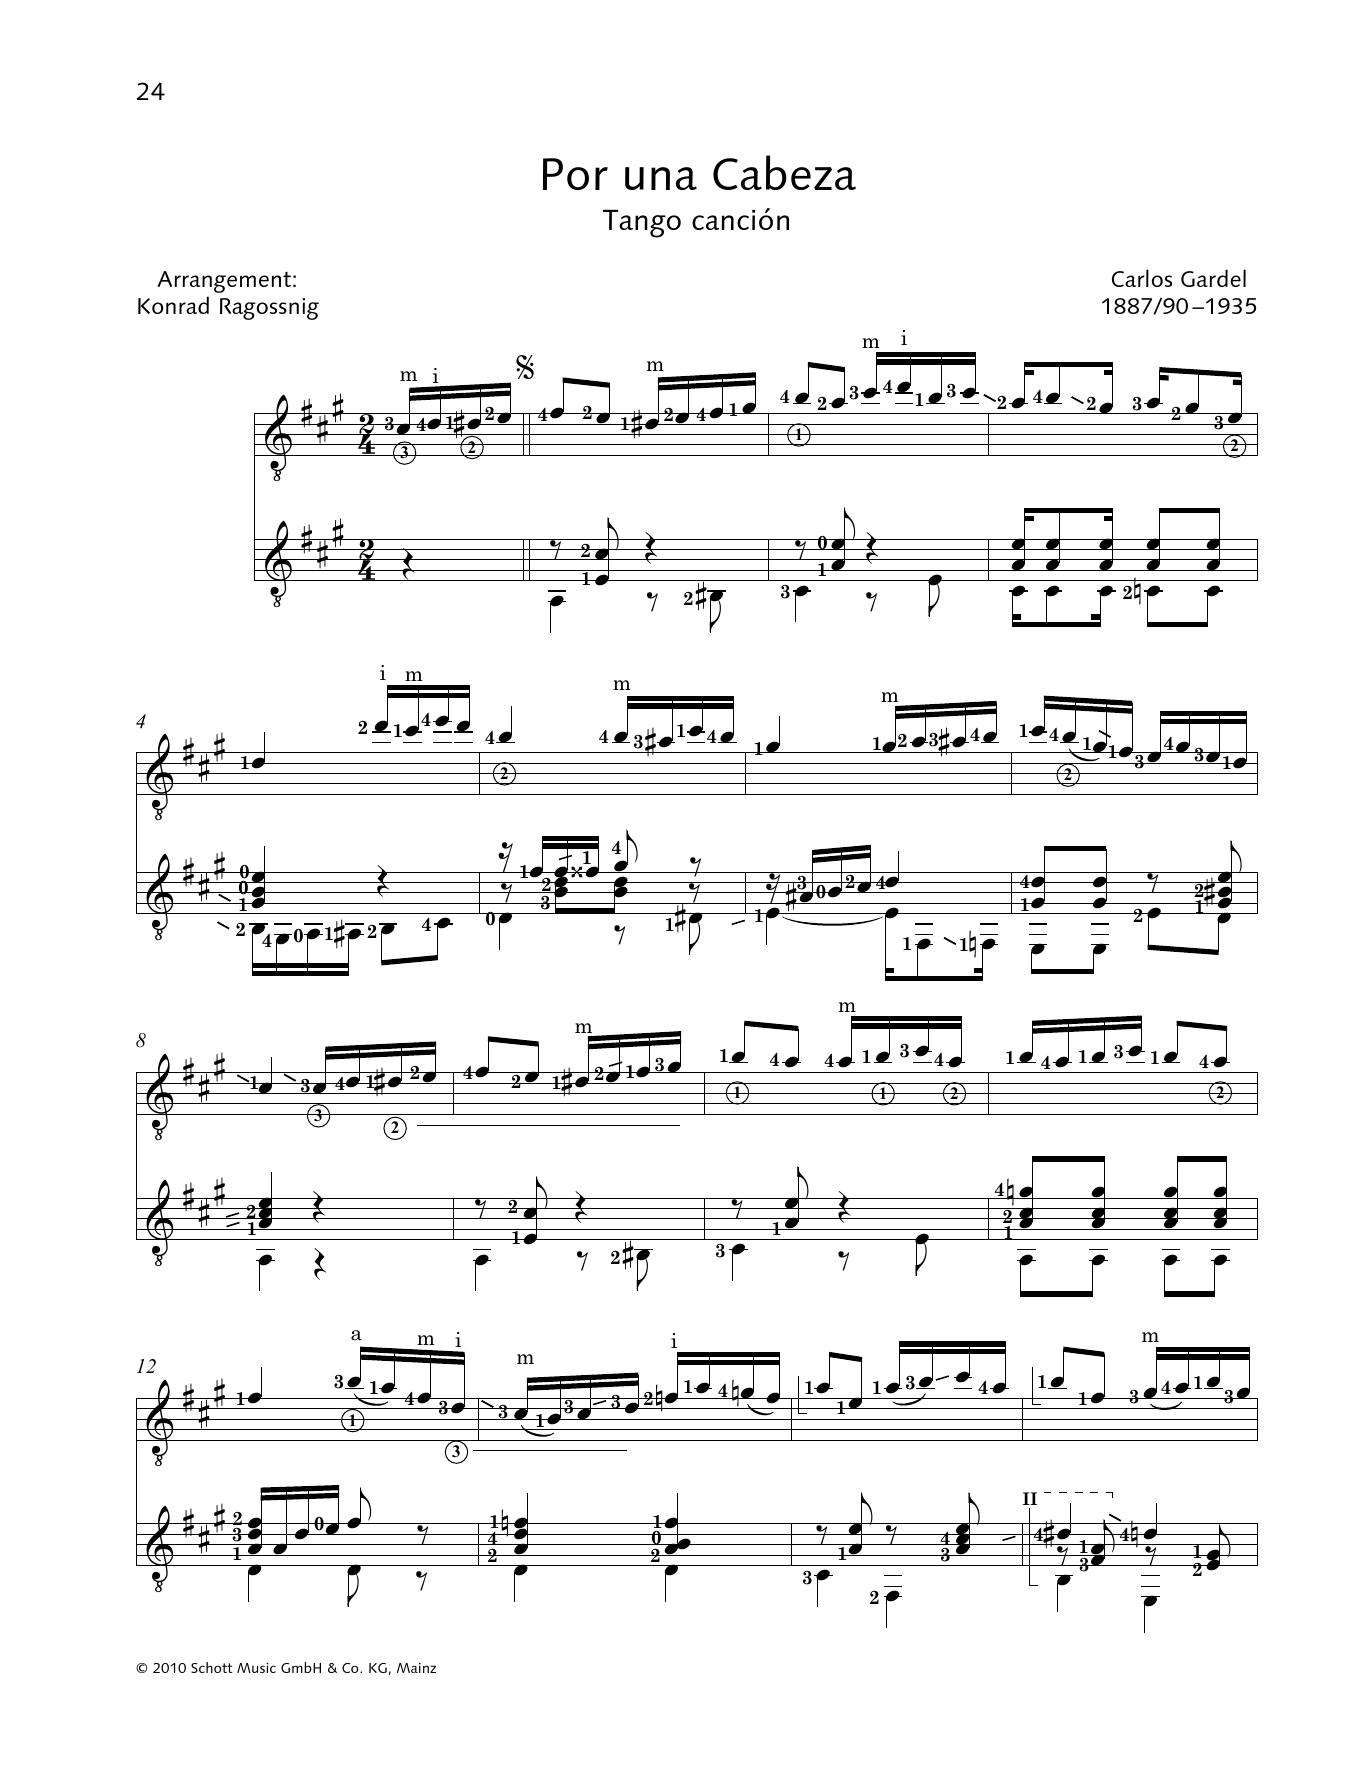 Carlos Gardel Por Una Cabeza - Full Score Sheet Music Notes & Chords for Performance Ensemble - Download or Print PDF